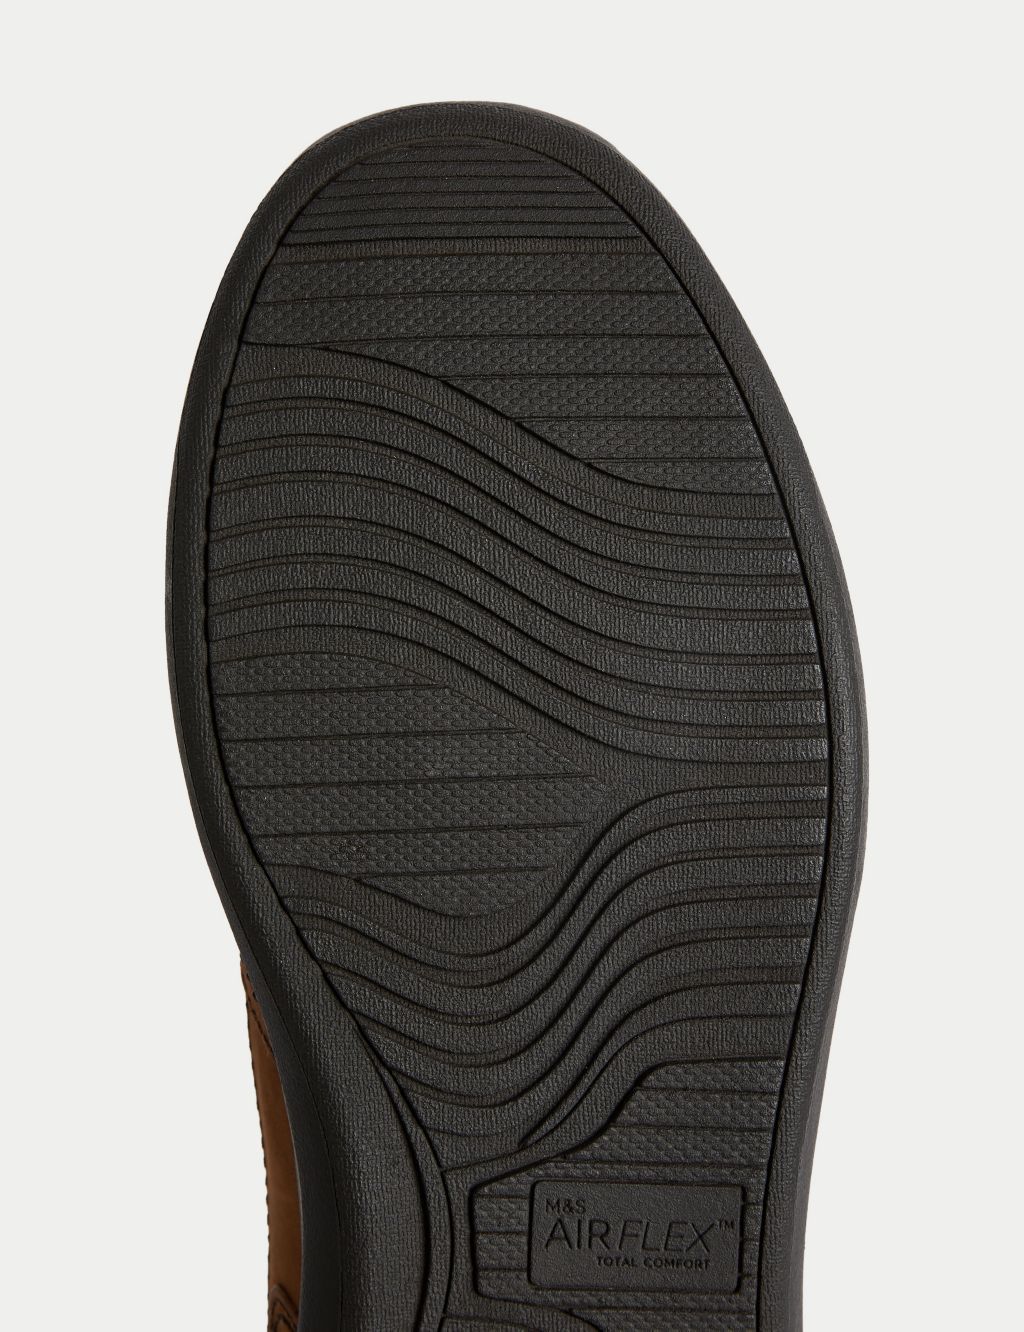 Wide Fit Airflex™ Leather Derby Shoes image 4